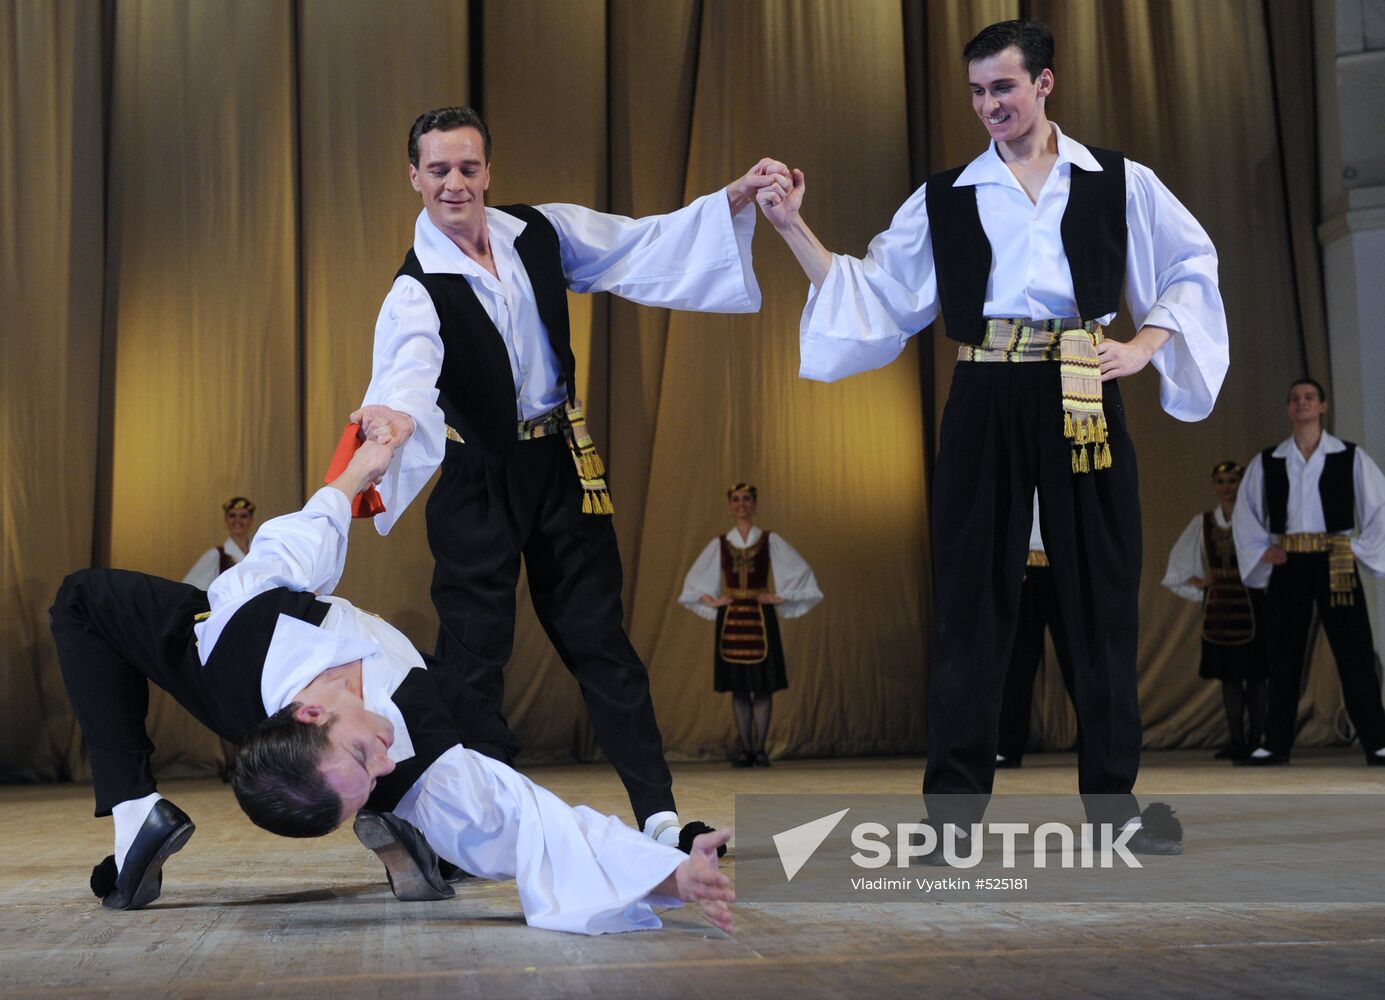 The "Sirtaki" suite of Greek dances